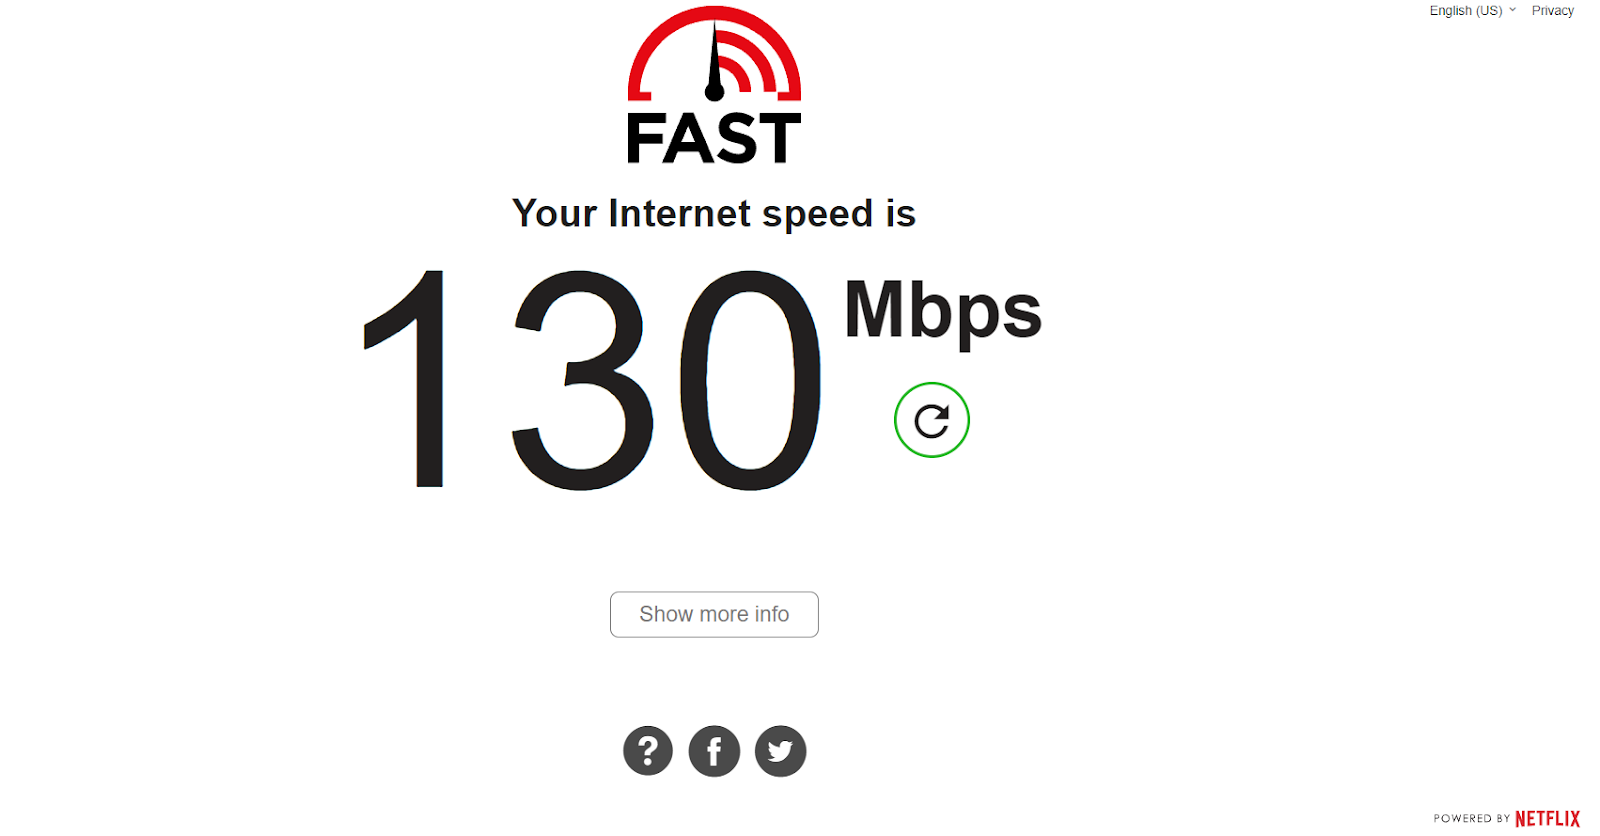 Https is faster. Fast.com. Fast Speed Test. Fast Speed Internet. Fast.com скорость интернета.